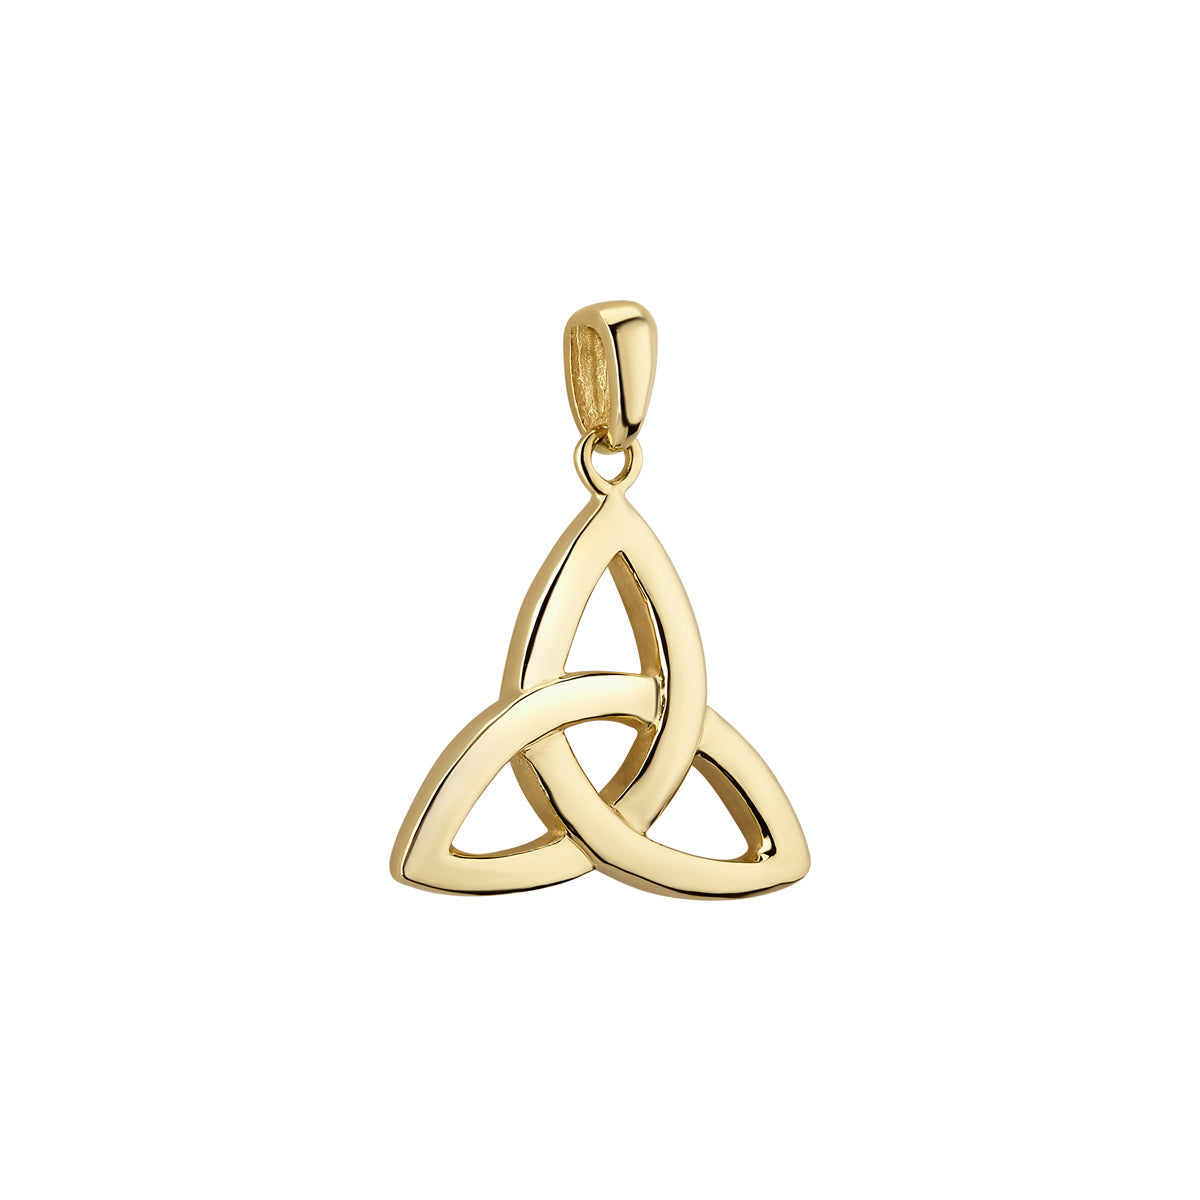 14k gold small trinity knot charm s8768 from Solvar